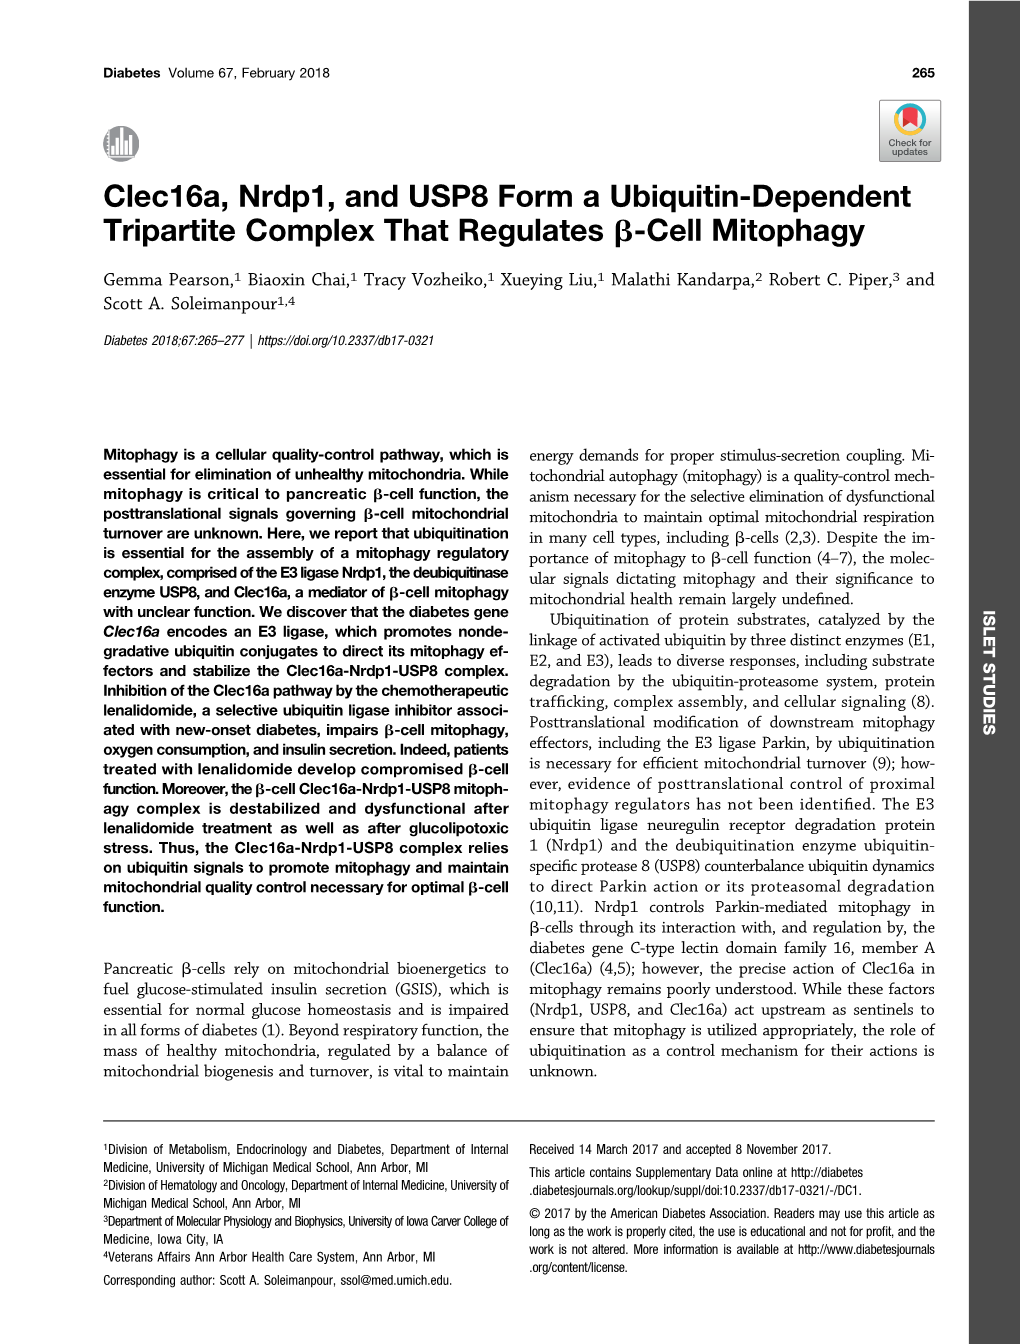 Clec16a, Nrdp1, and USP8 Form a Ubiquitin-Dependent Tripartite Complex That Regulates B-Cell Mitophagy